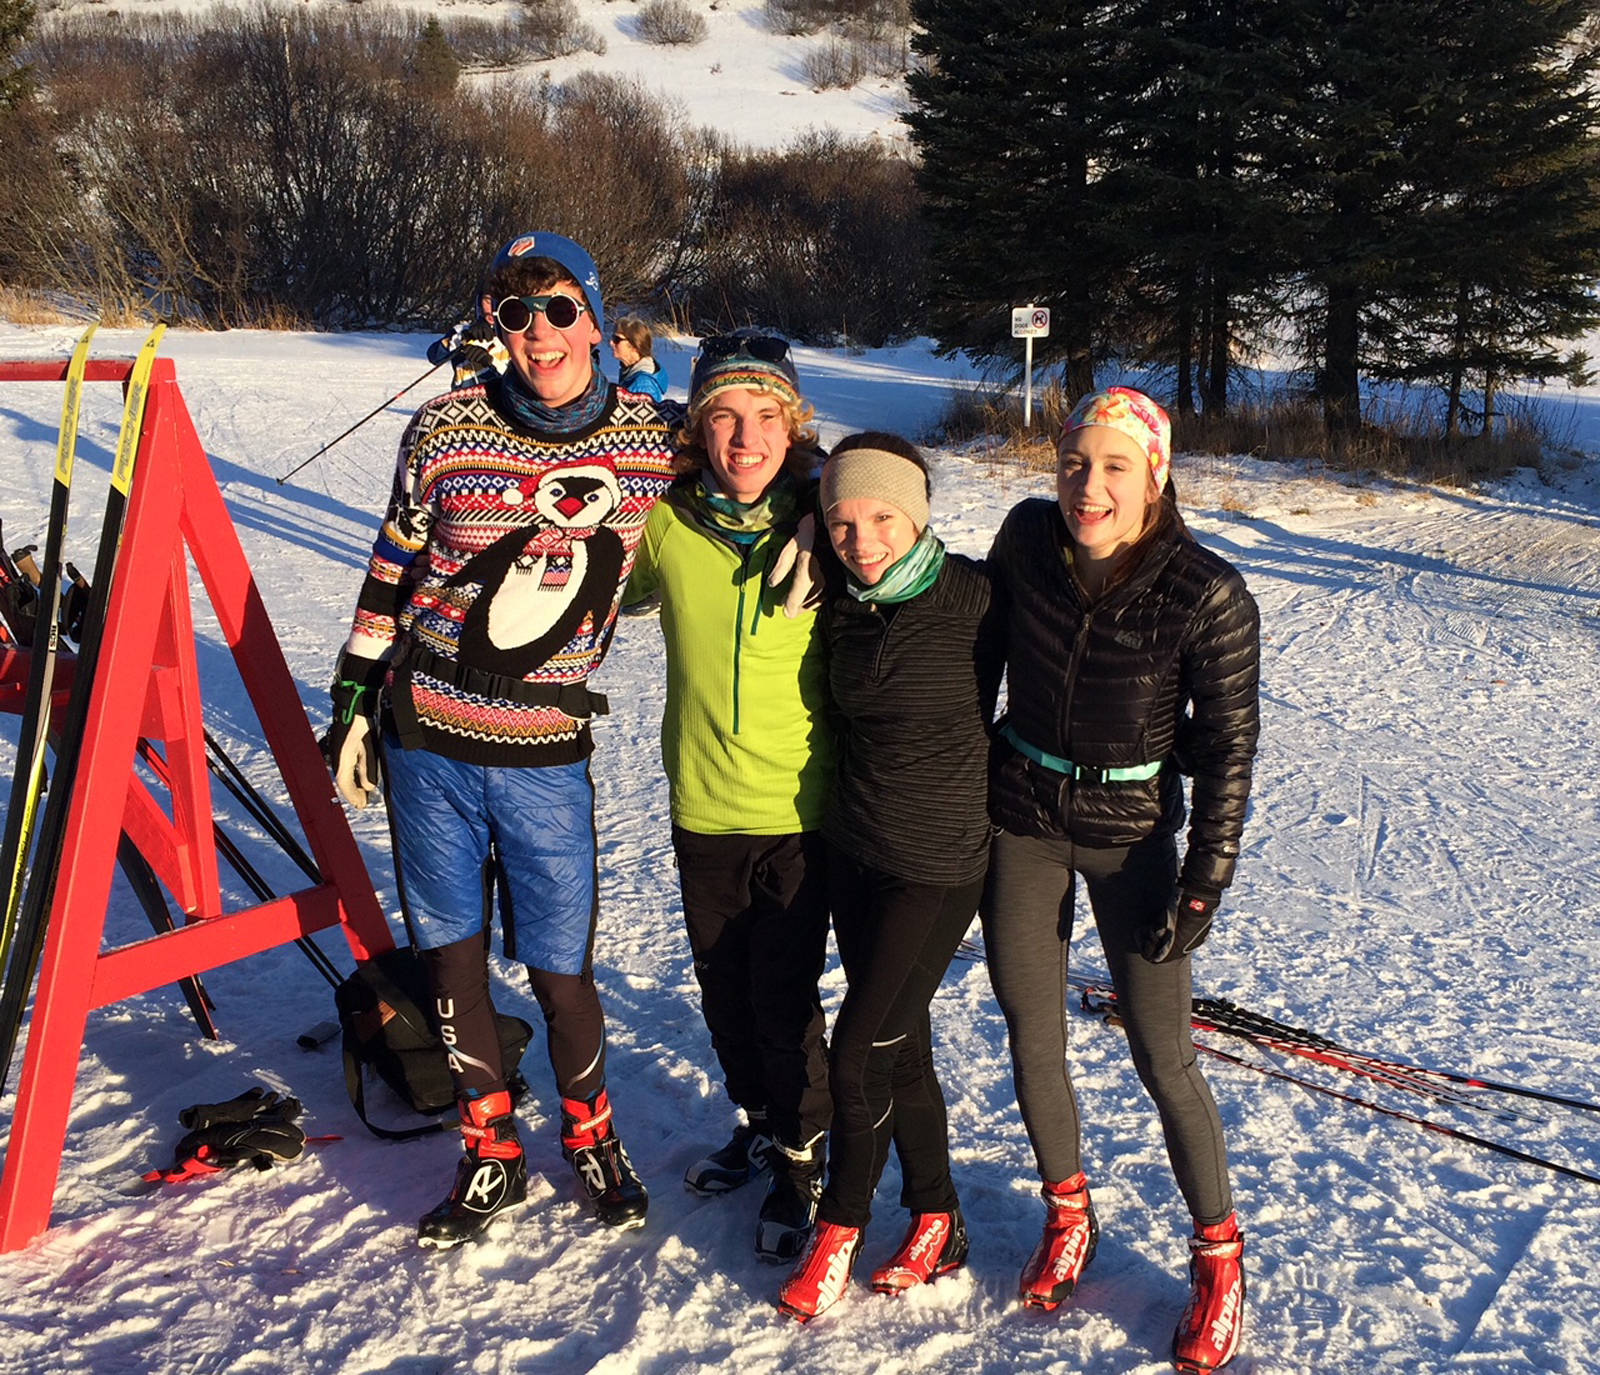 Members of the Homer High School Nordic ski team enjoy this year’s Ski Your Age event Dec. 26, 2017 at the Lookout Mountain ski trails near Homer, Alaska. (Photo courtesy Jana Davis)